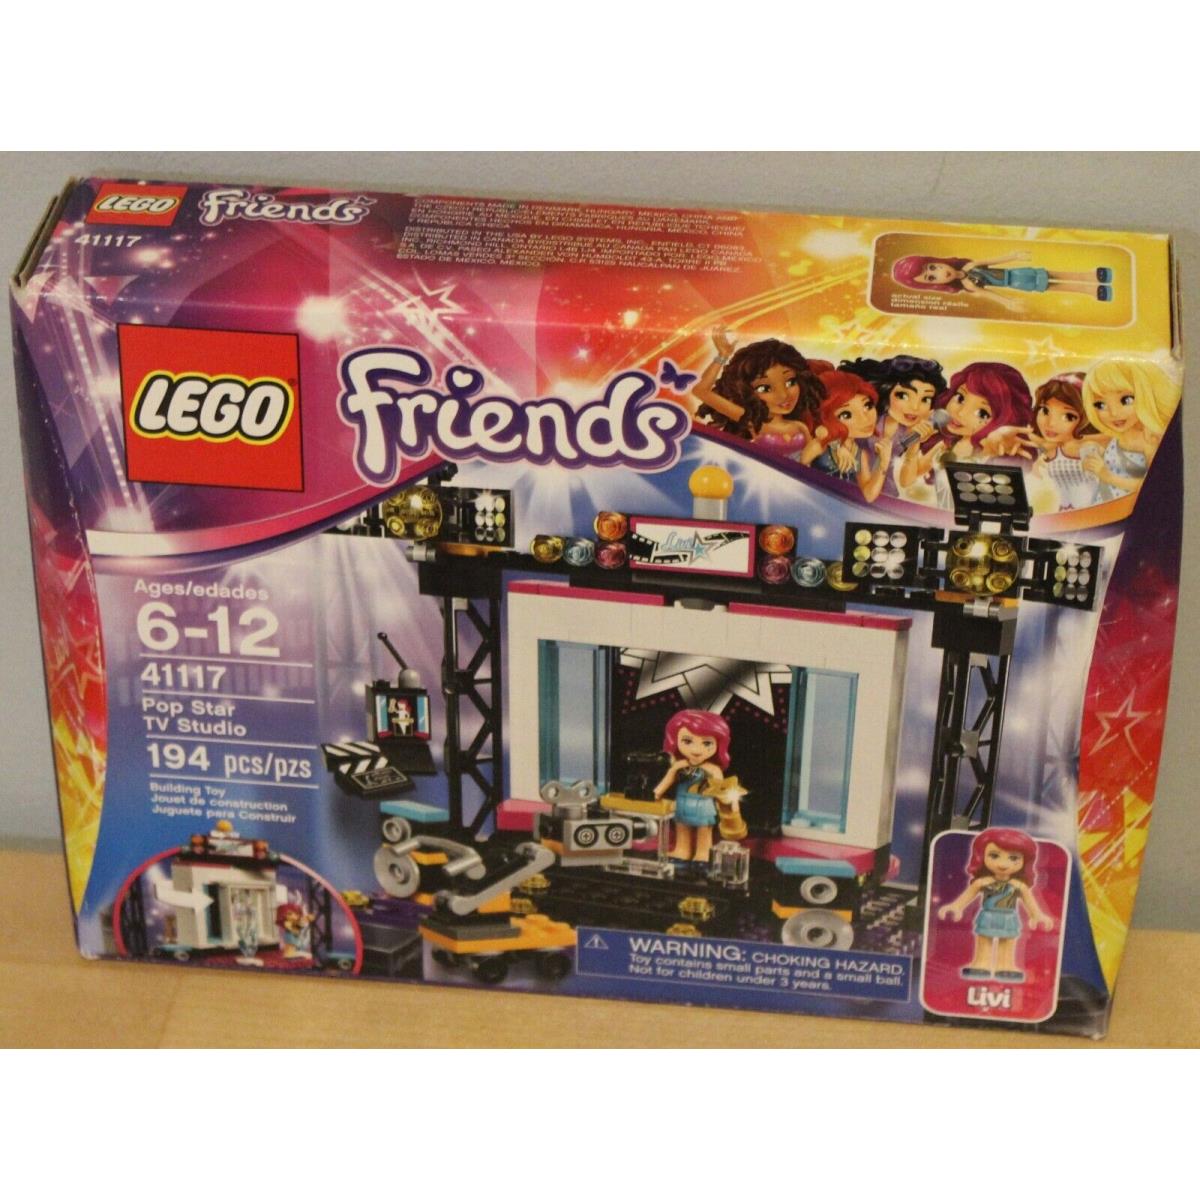 Damaged/new/sealed Lego Friends 41117 Pop Star TV Studio